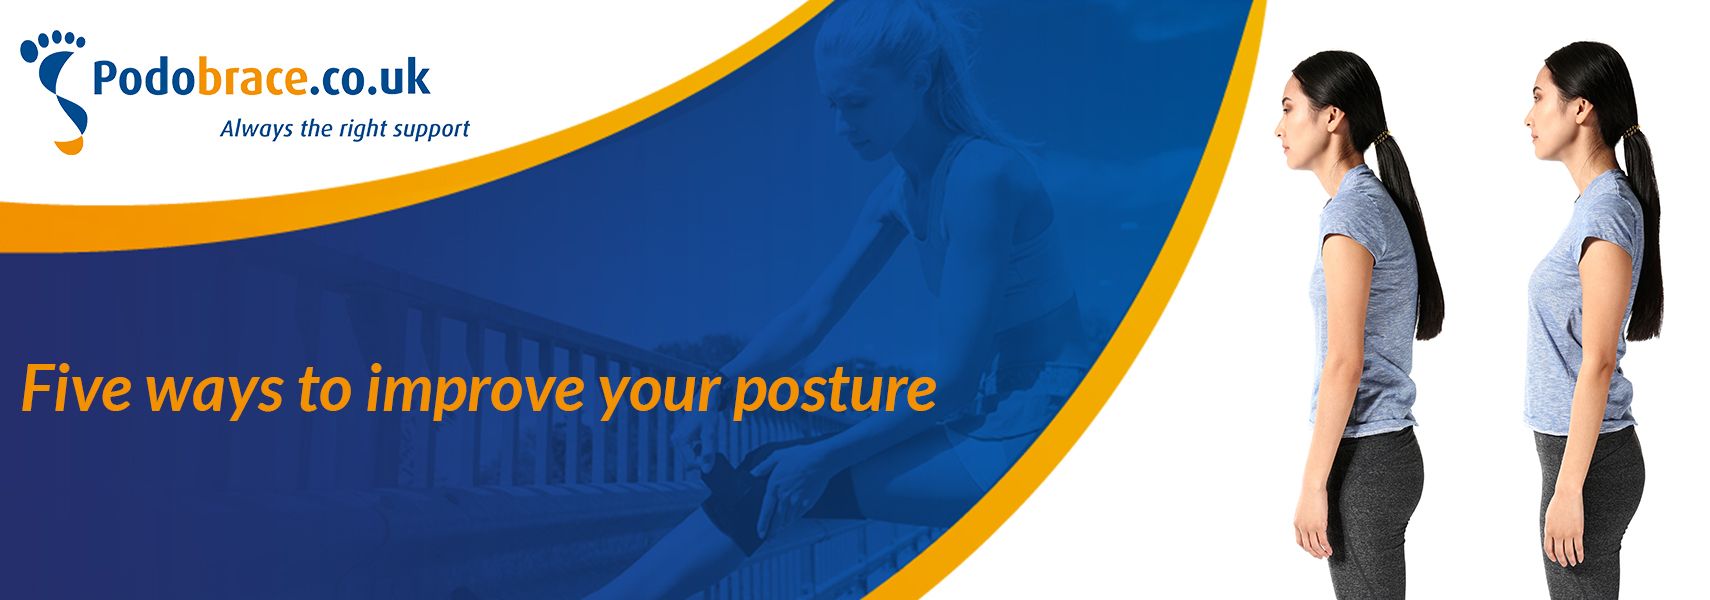 Five ways to improve your posture